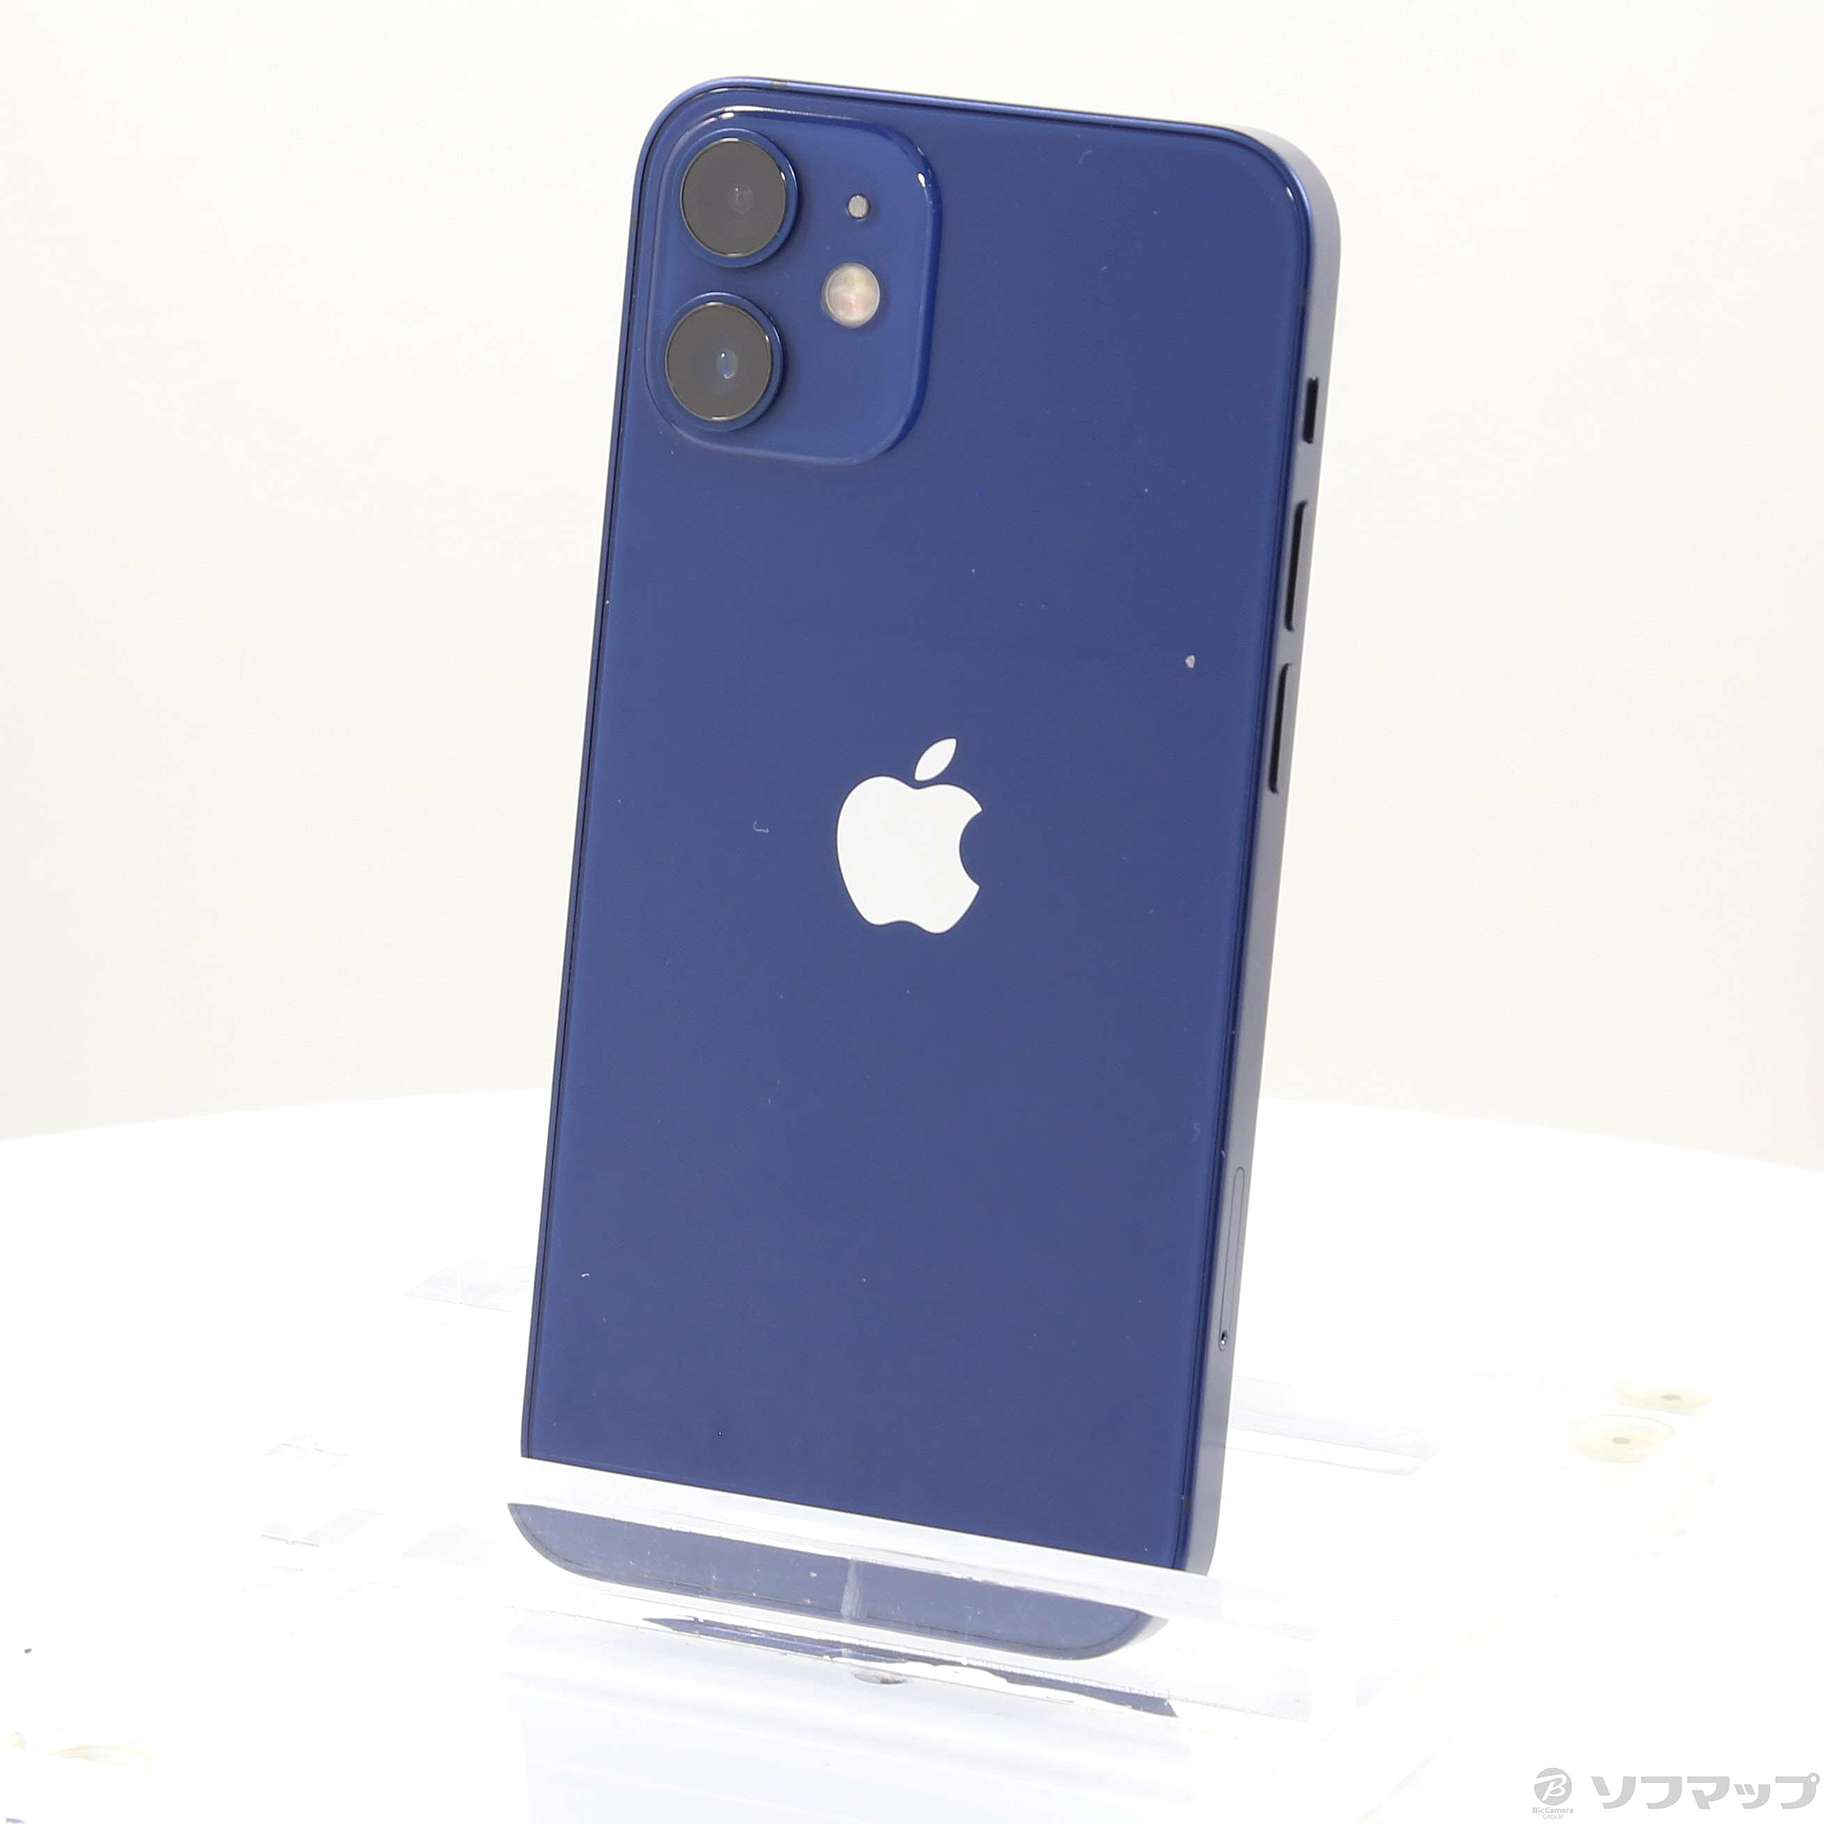 【Apple】iPhone12 mini 128GB ブルー【品】SIMカードなし